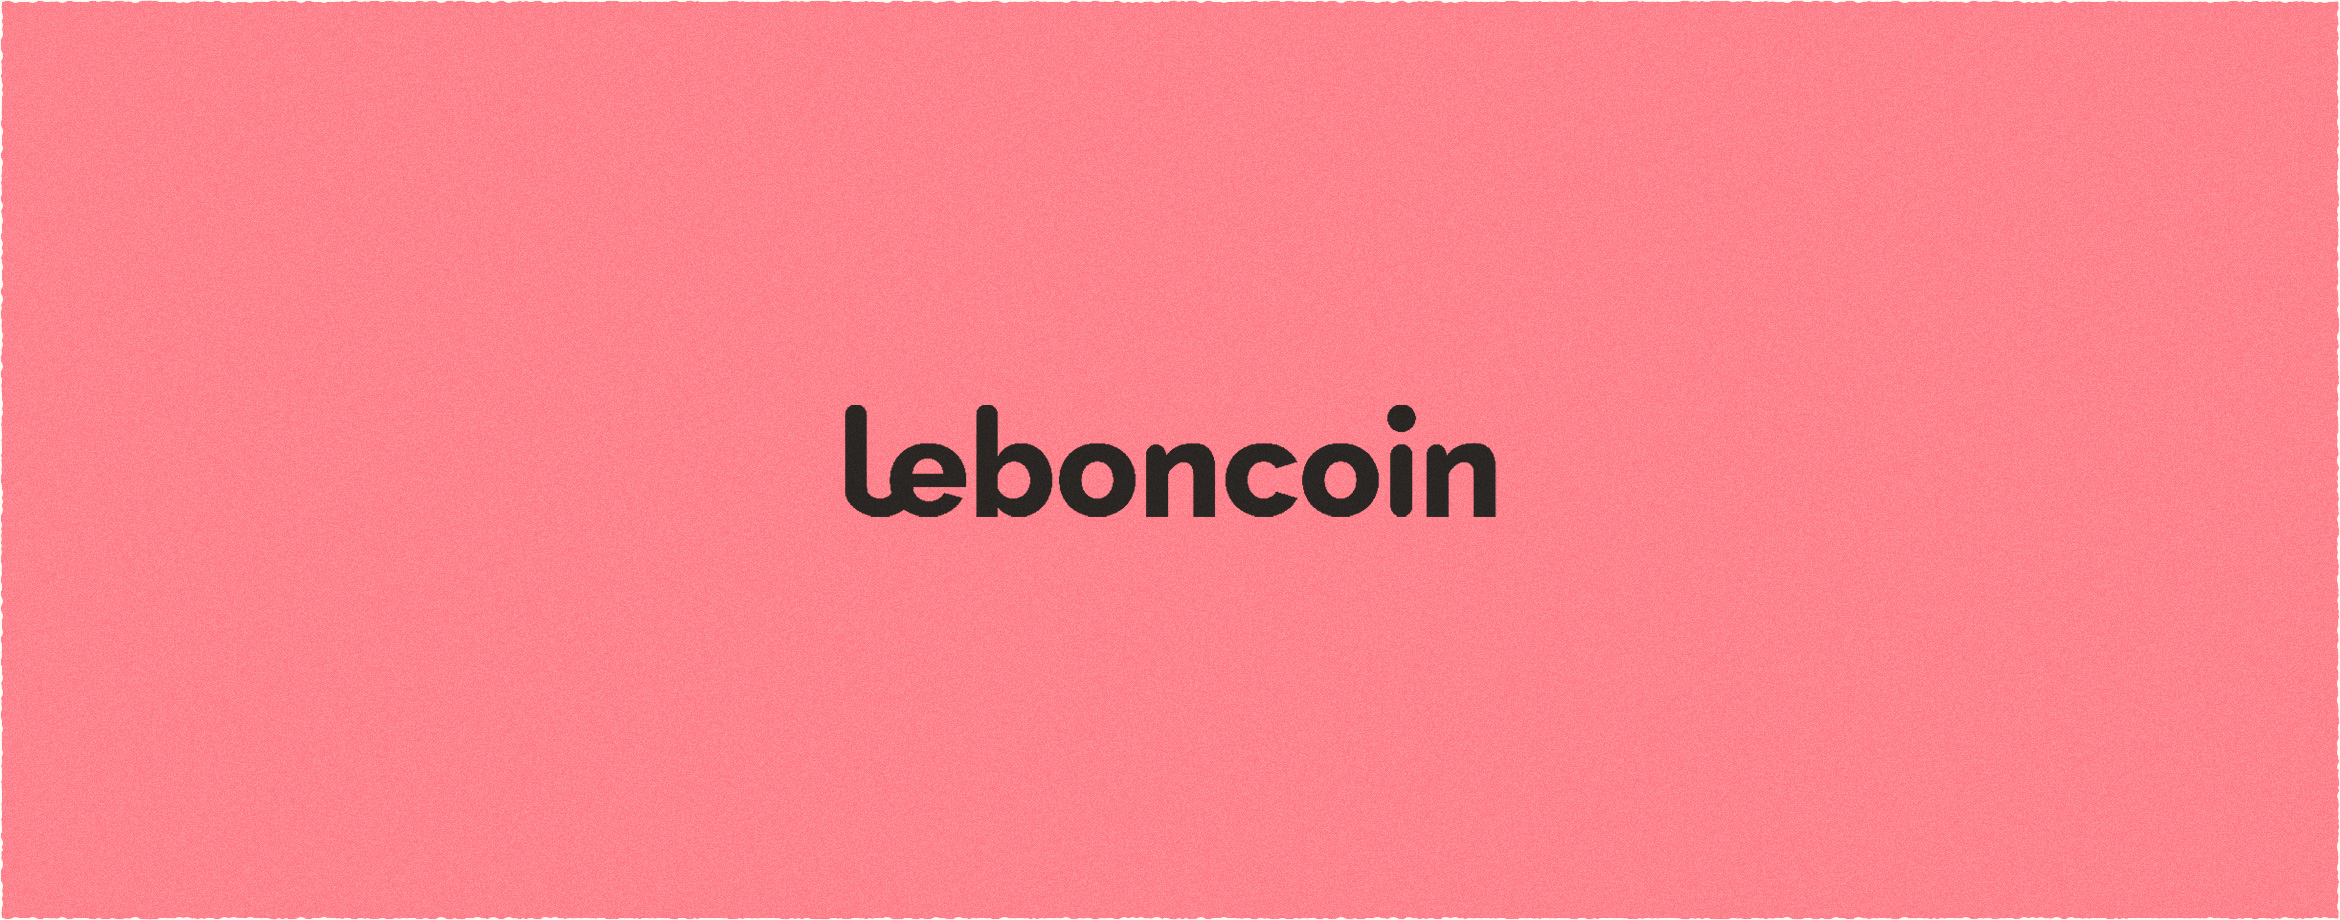 Leboncoin - Direction artistique & illustration